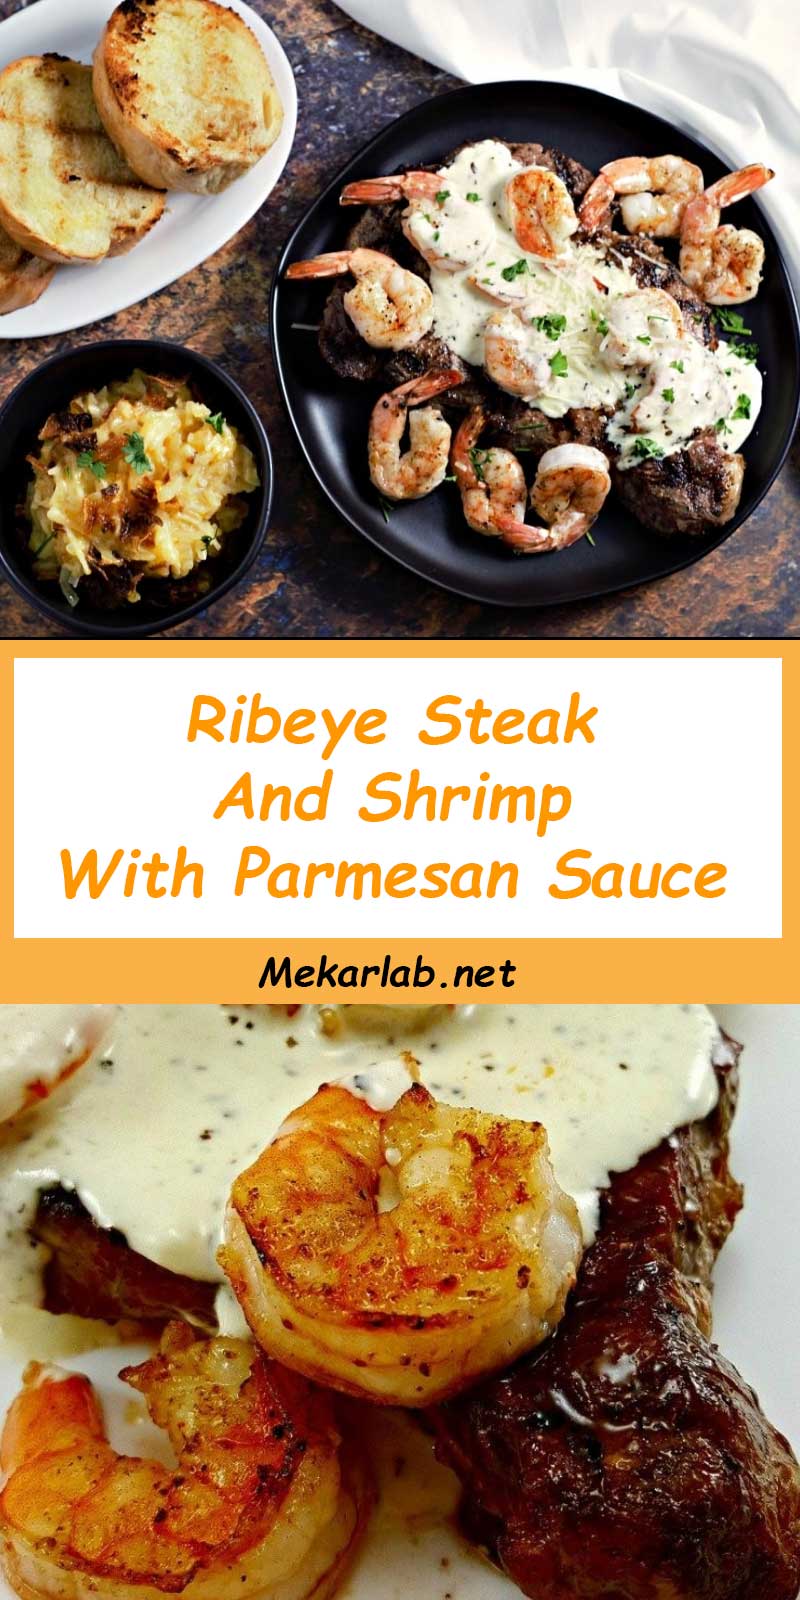 Ribeye Steak And Shrimp With Parmesan Sauce – Mekarlab.net